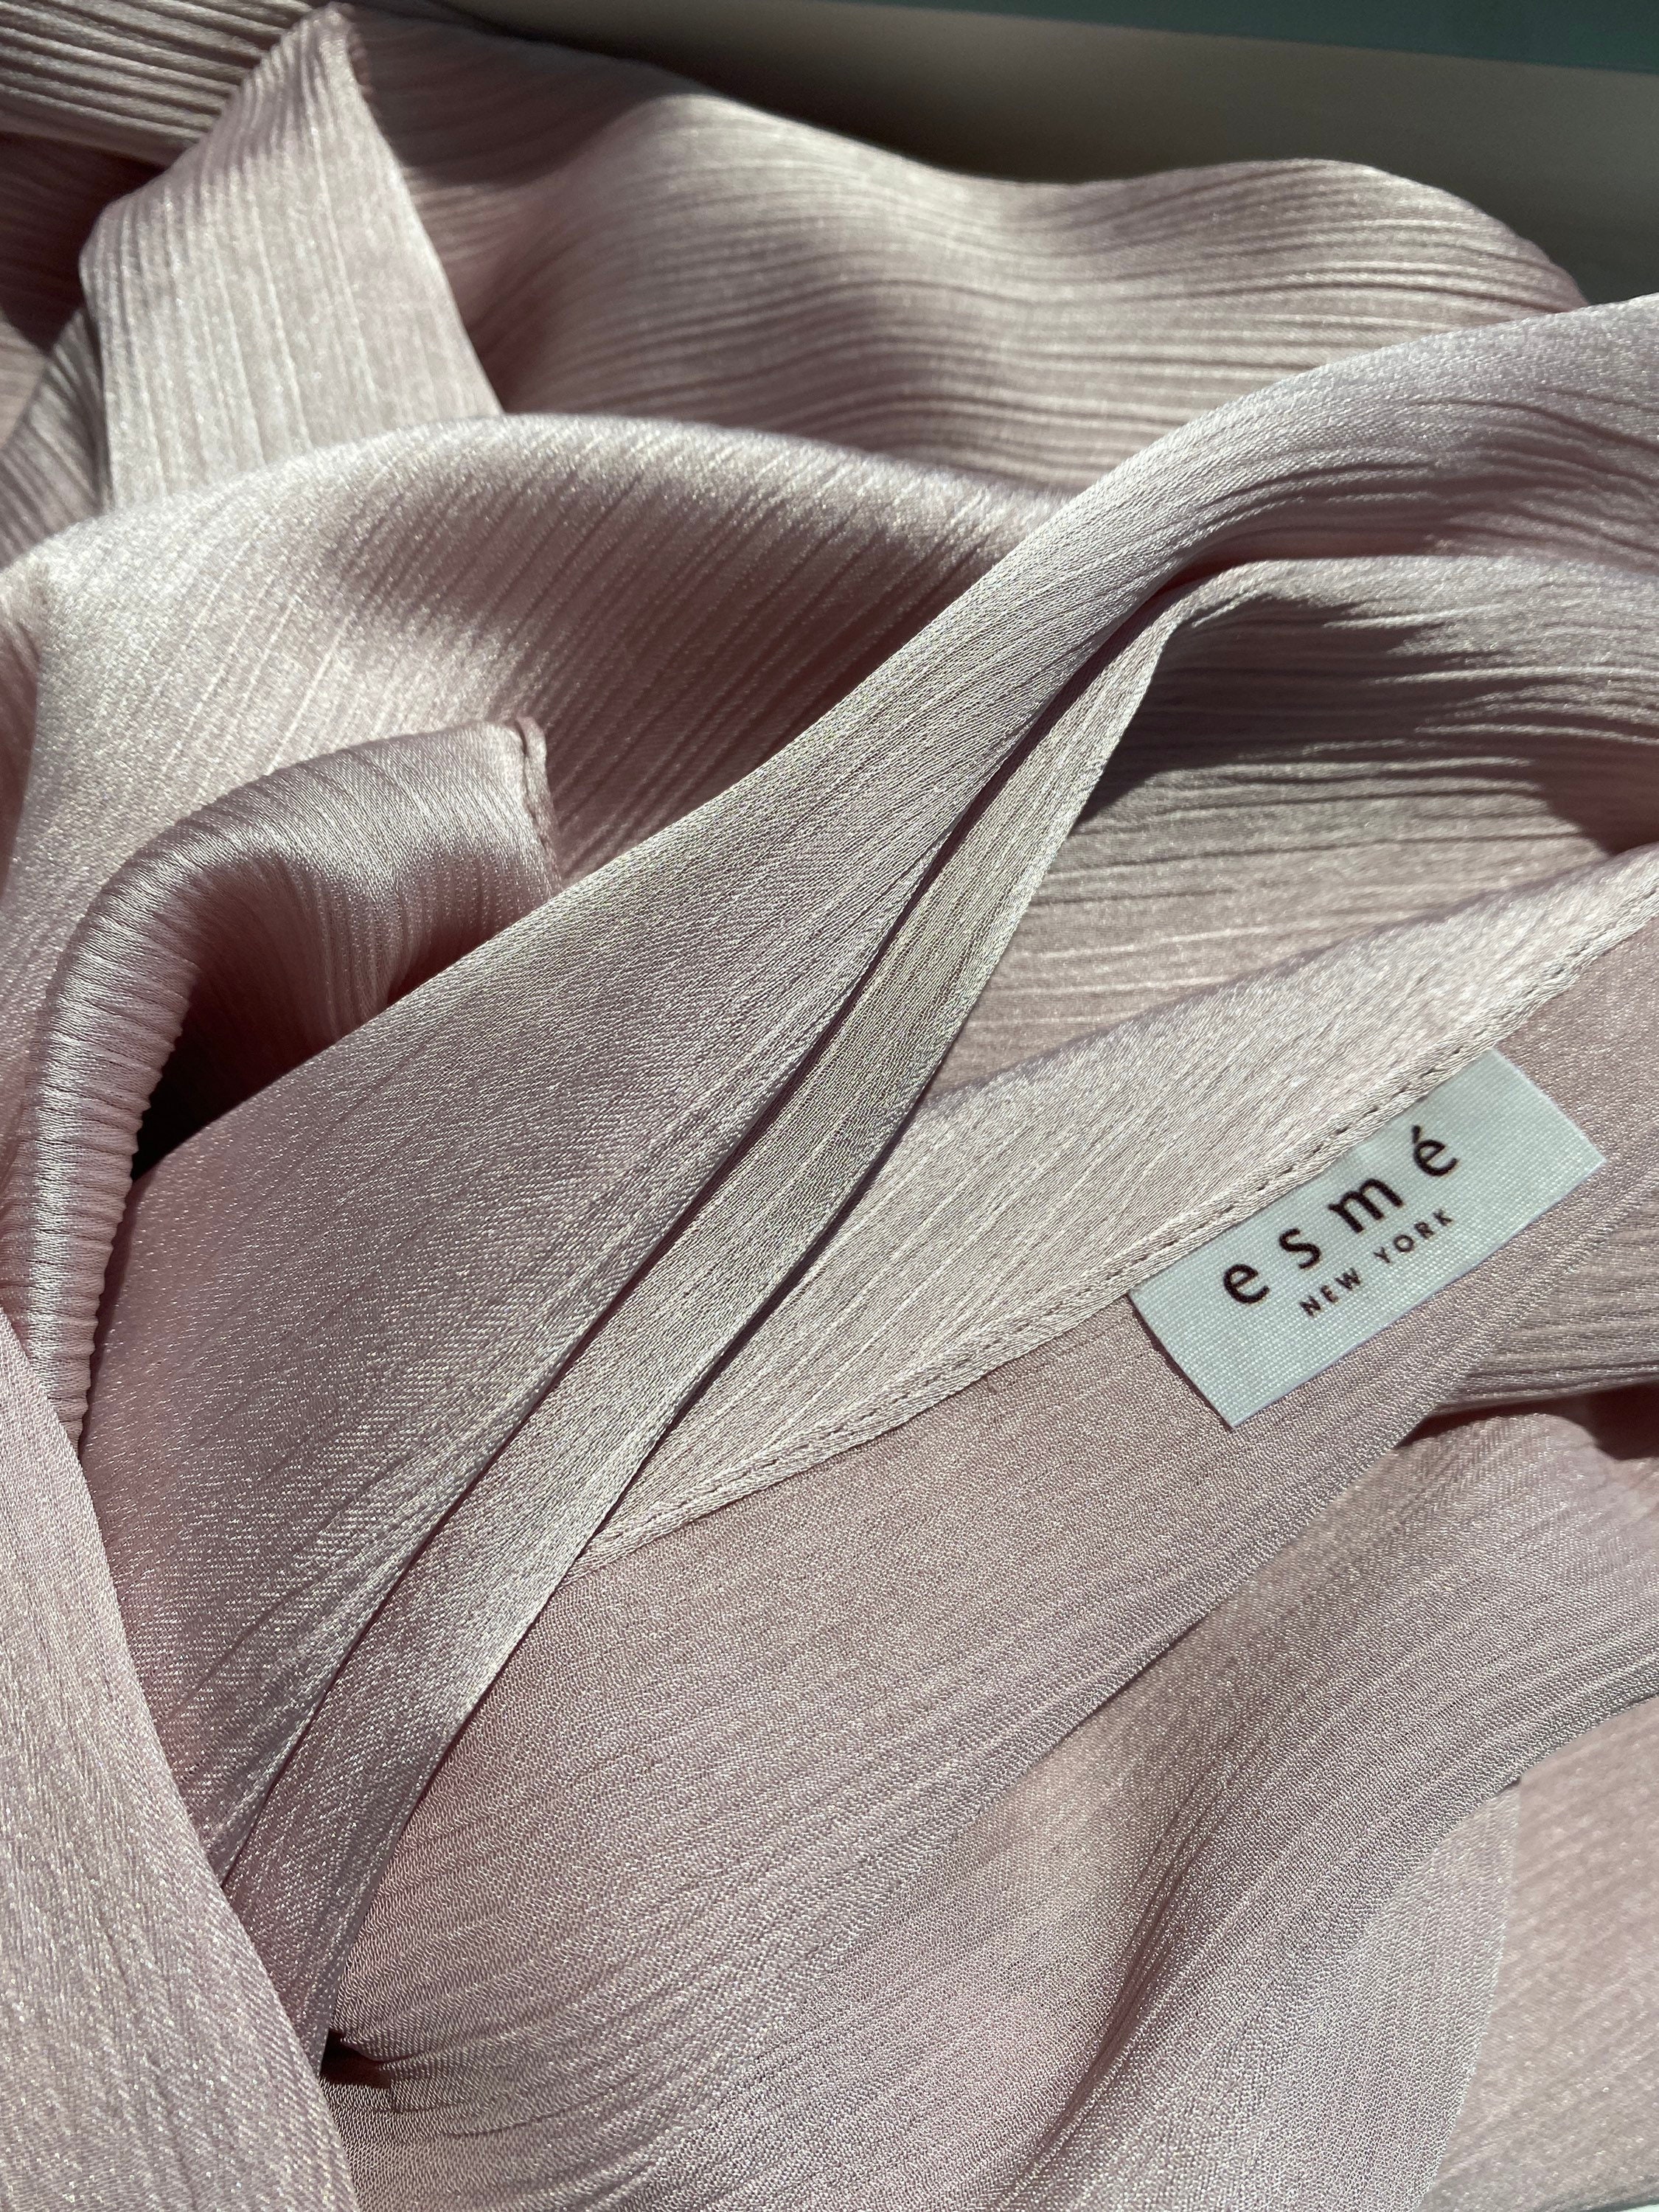 Macaboom Sale 100% Silk Baby Blush Pink with Grey Element Scarf 180cm*90cm Elegant Gift Designer Gift for Her